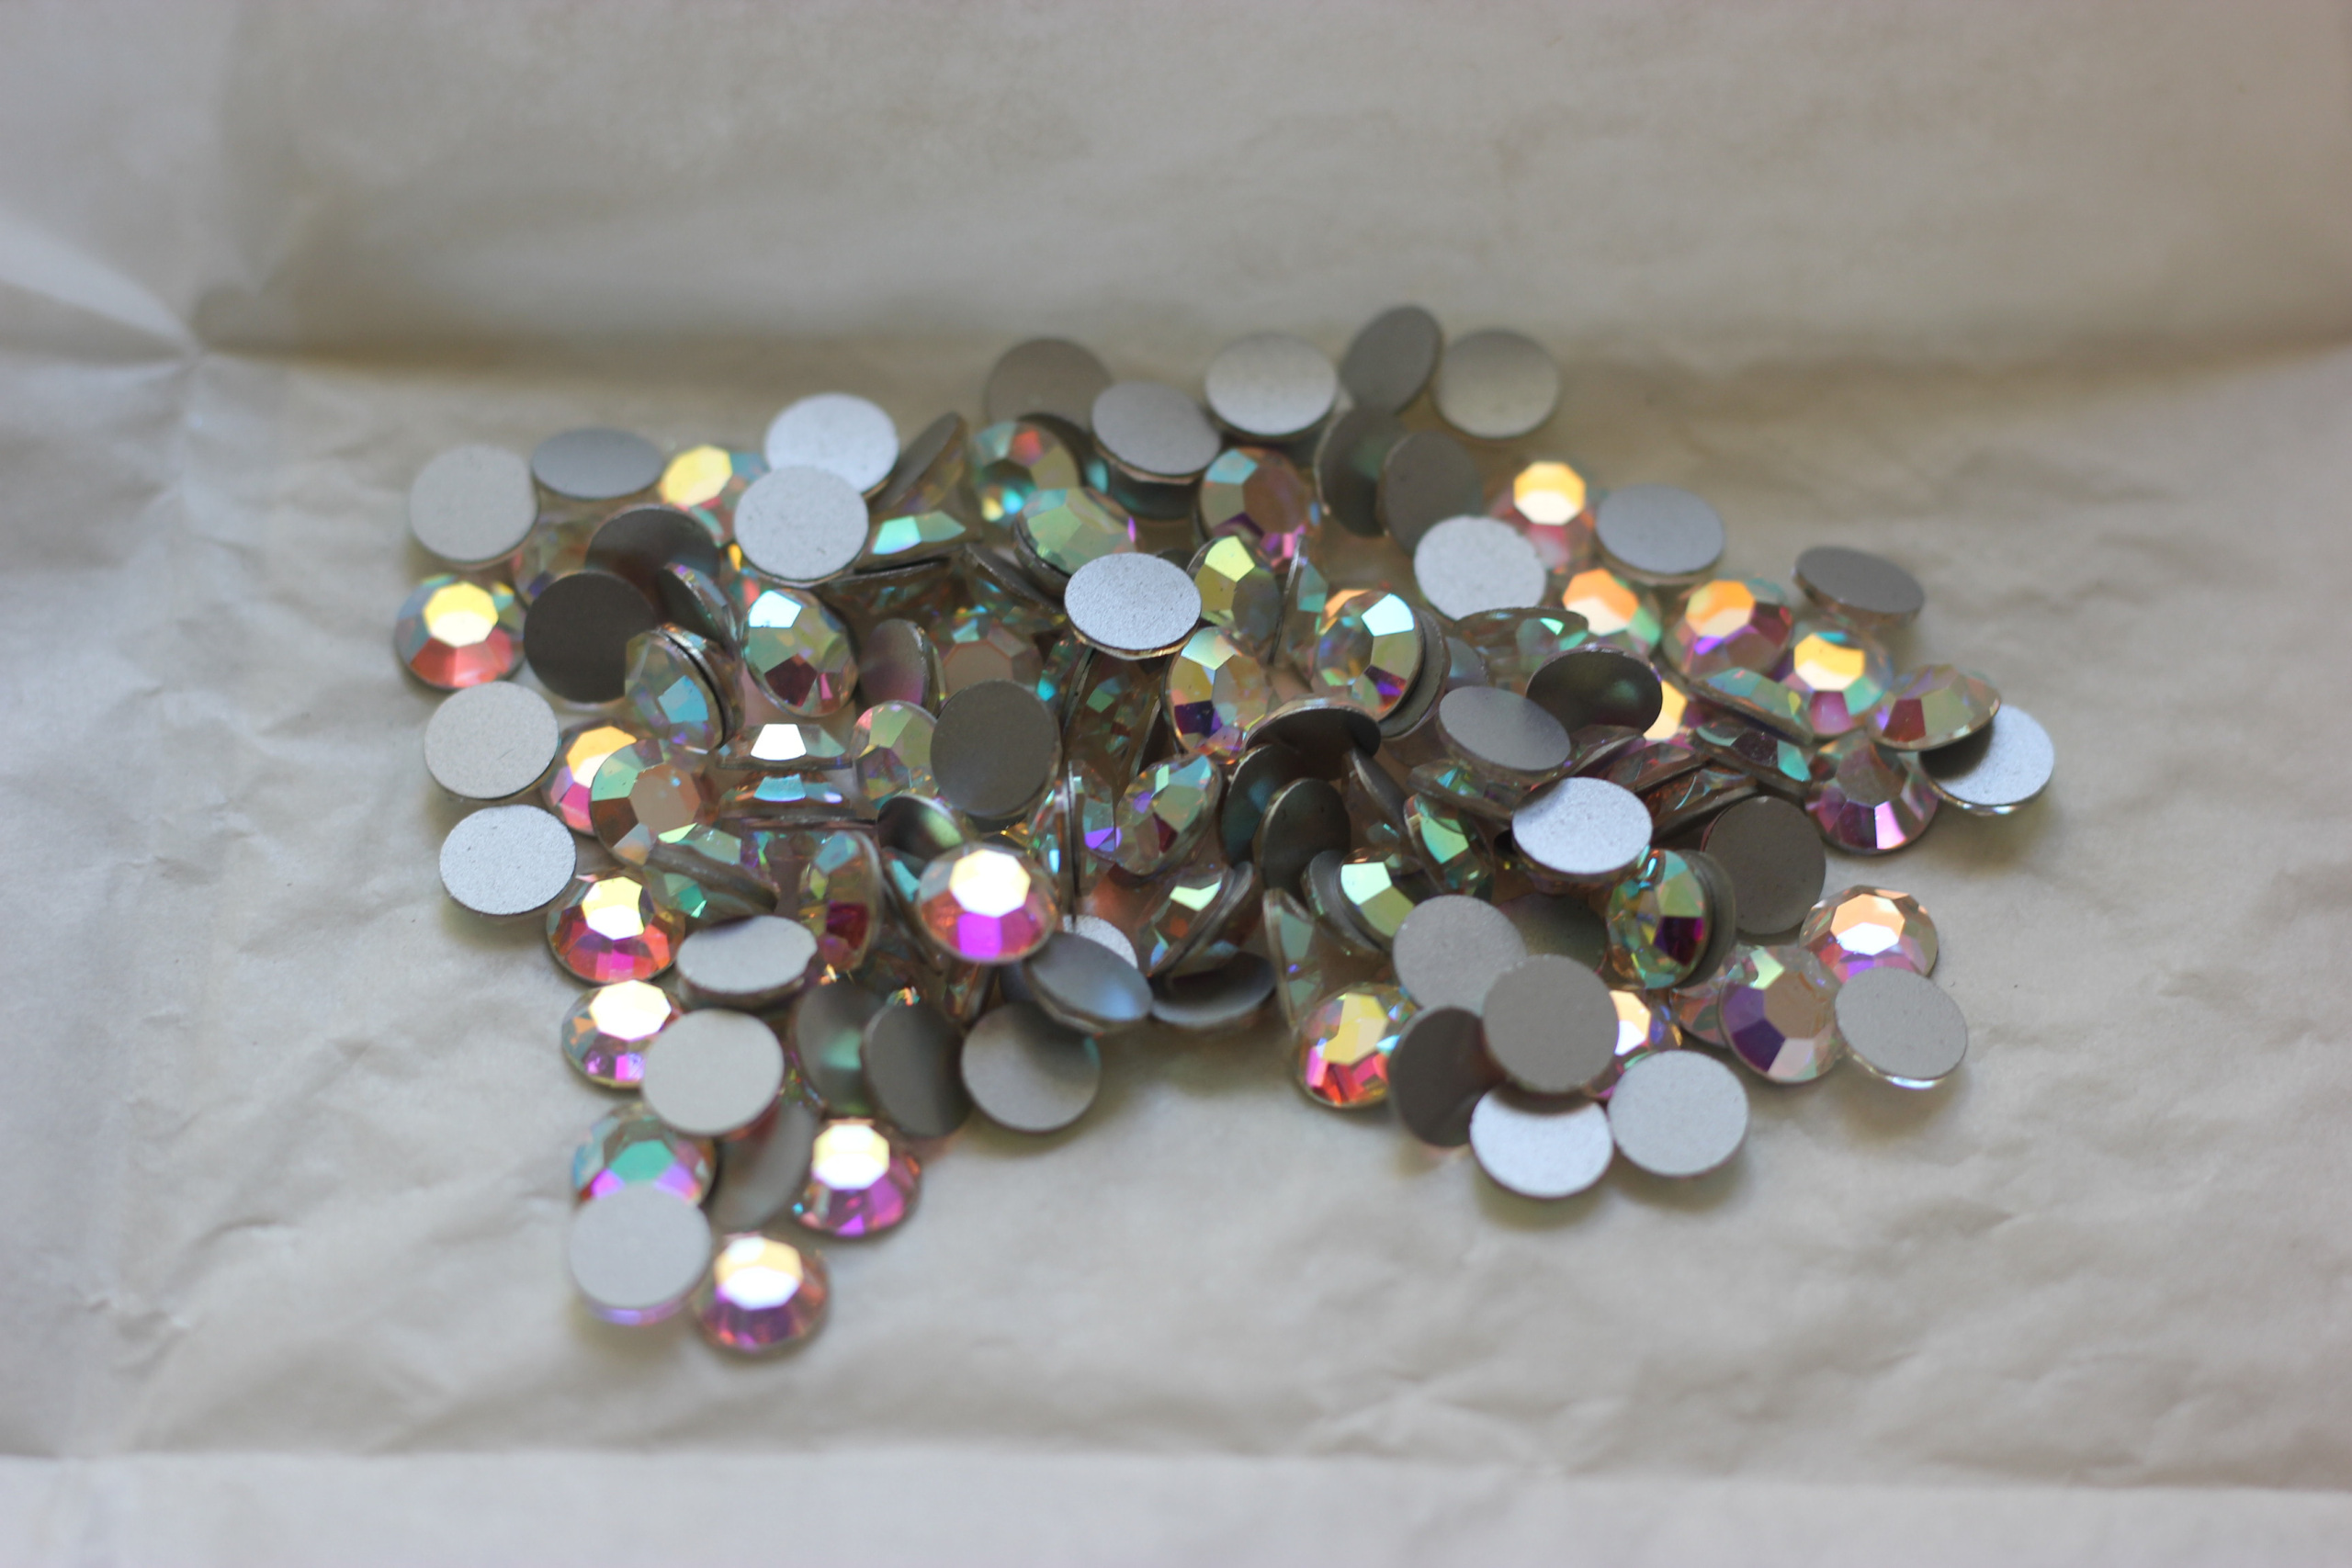 Swarovski Crystals, Rhinestones, Beads and More - wide 2